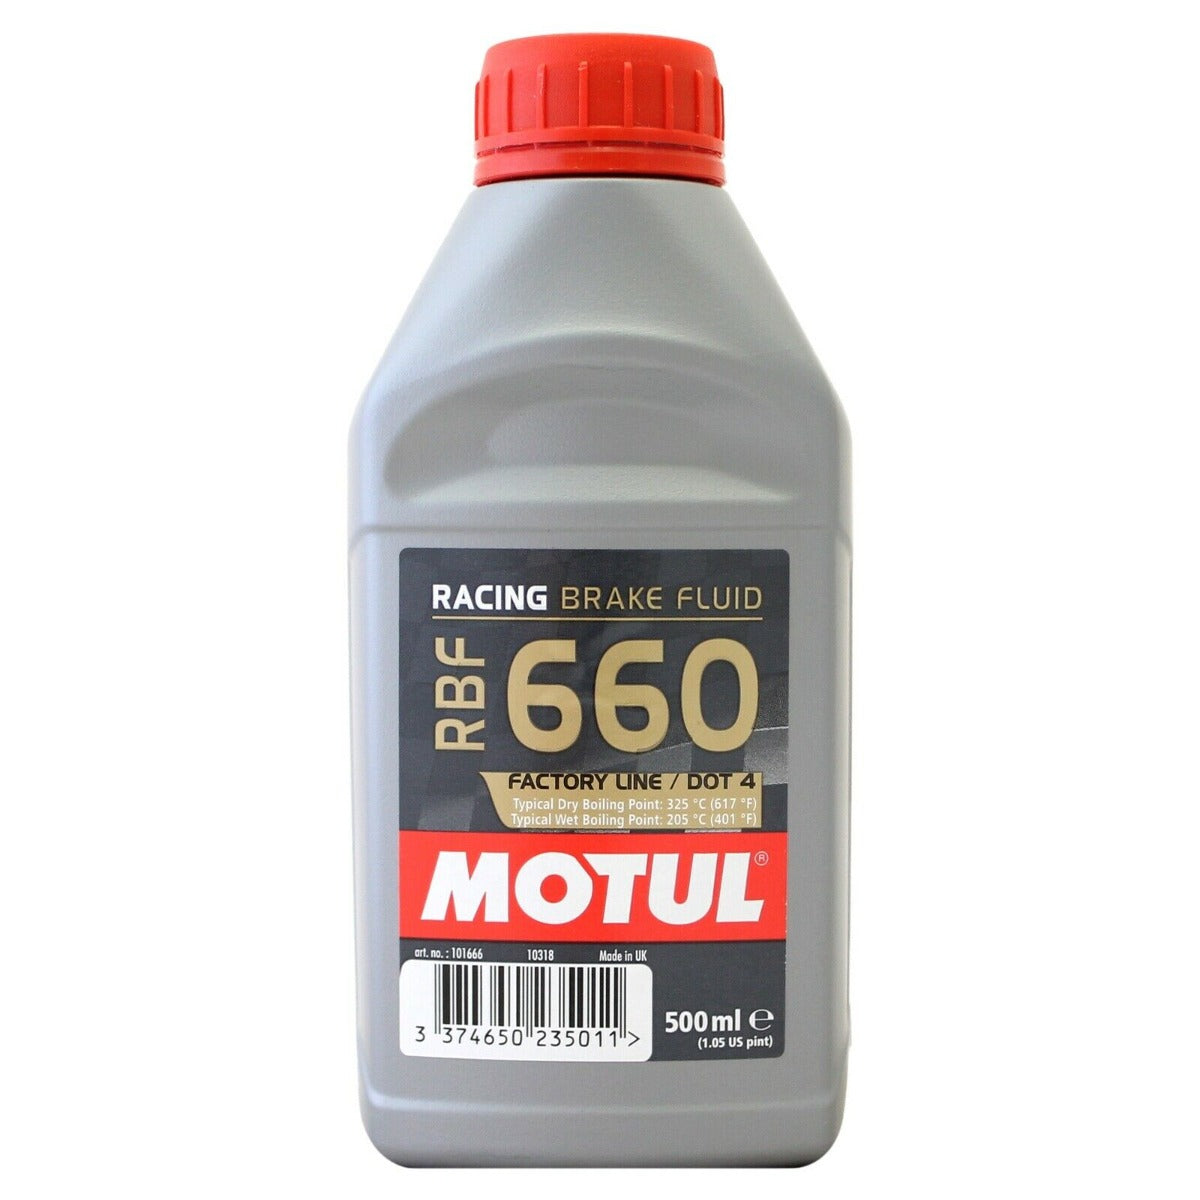 MOTUL RBF660 Racing Brake Fluid - Dot 4